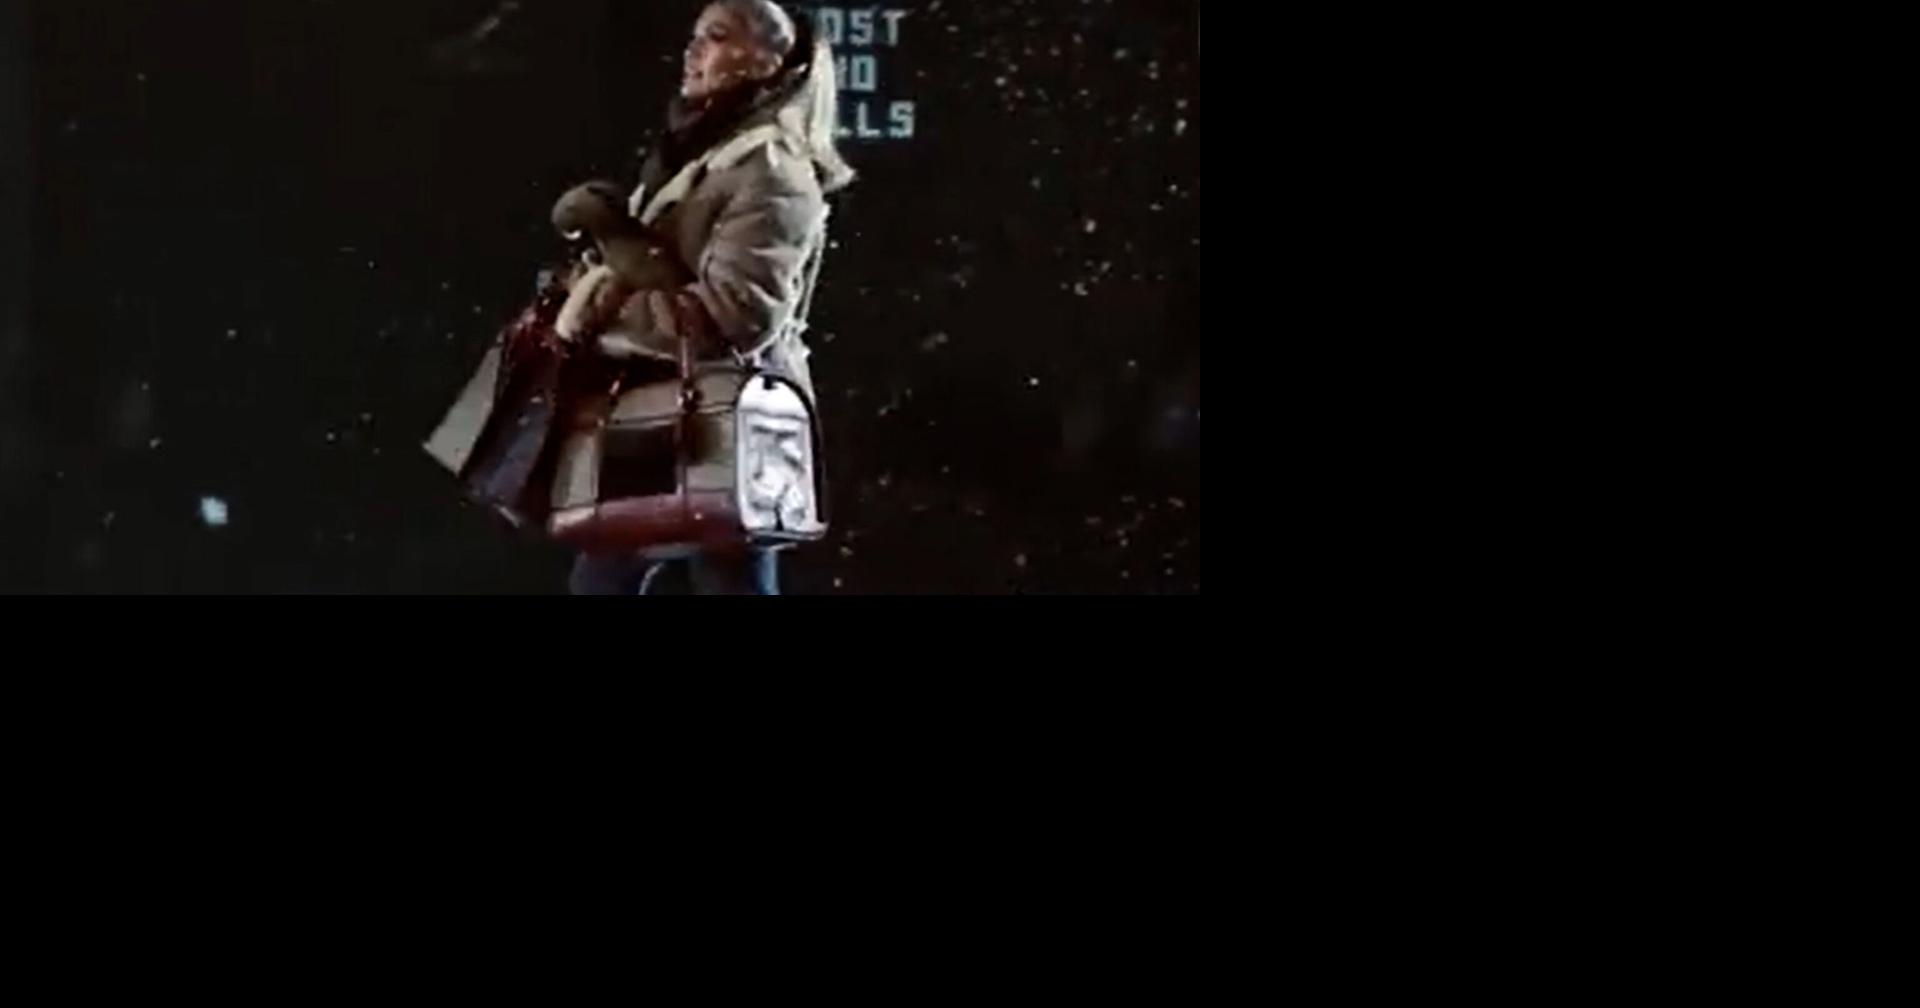 Jennifer Lopez recreates 'All I Have' video scene for Coach